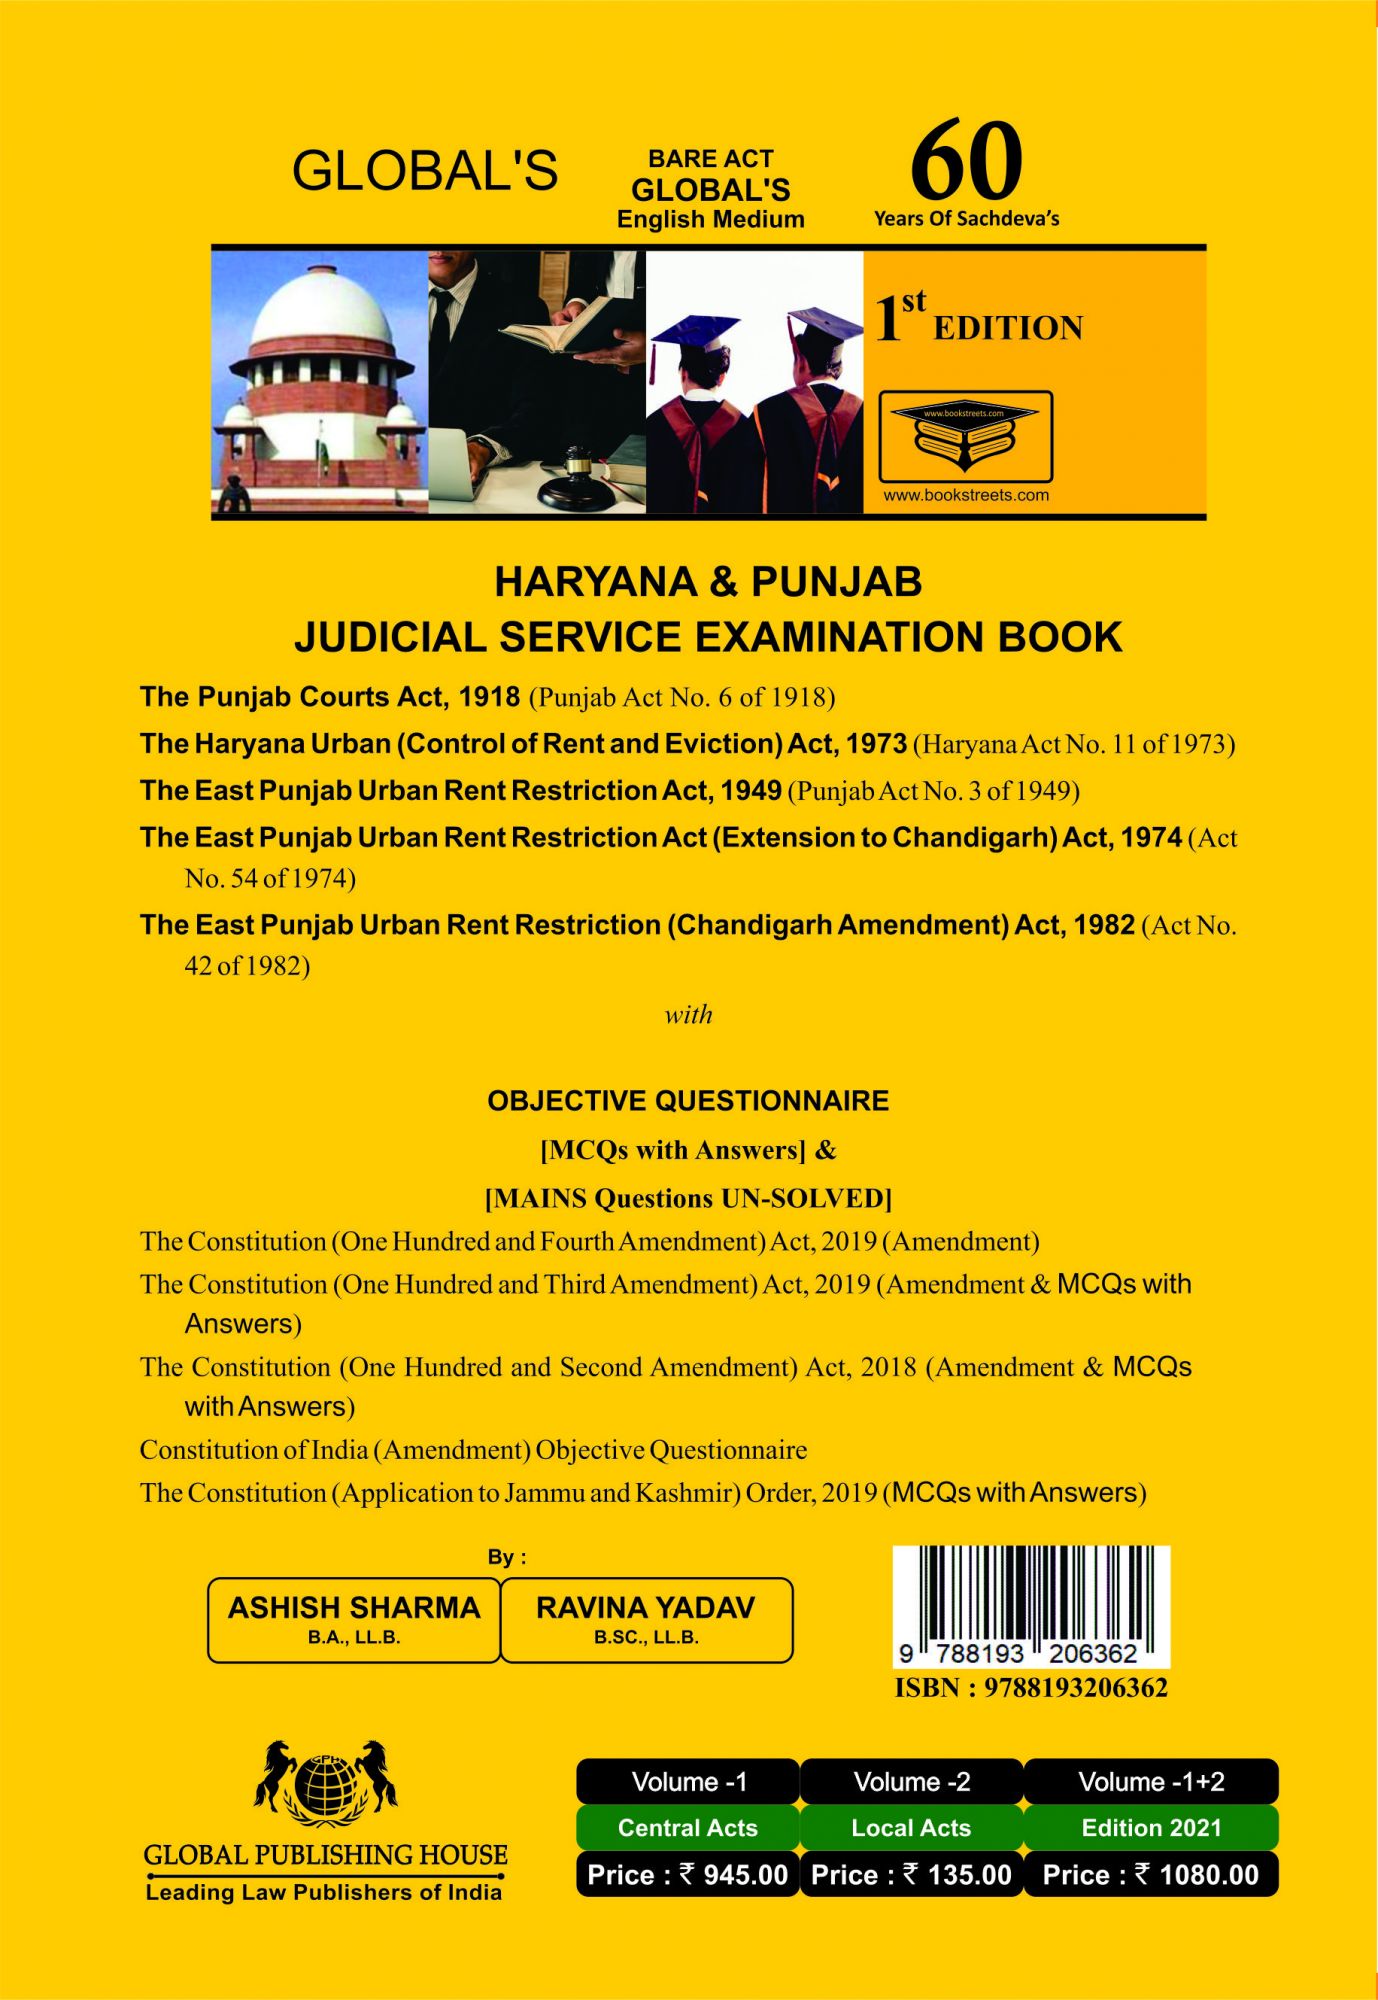 Haryana and Punjab Judicial Service Examination Book By Global Publishing House